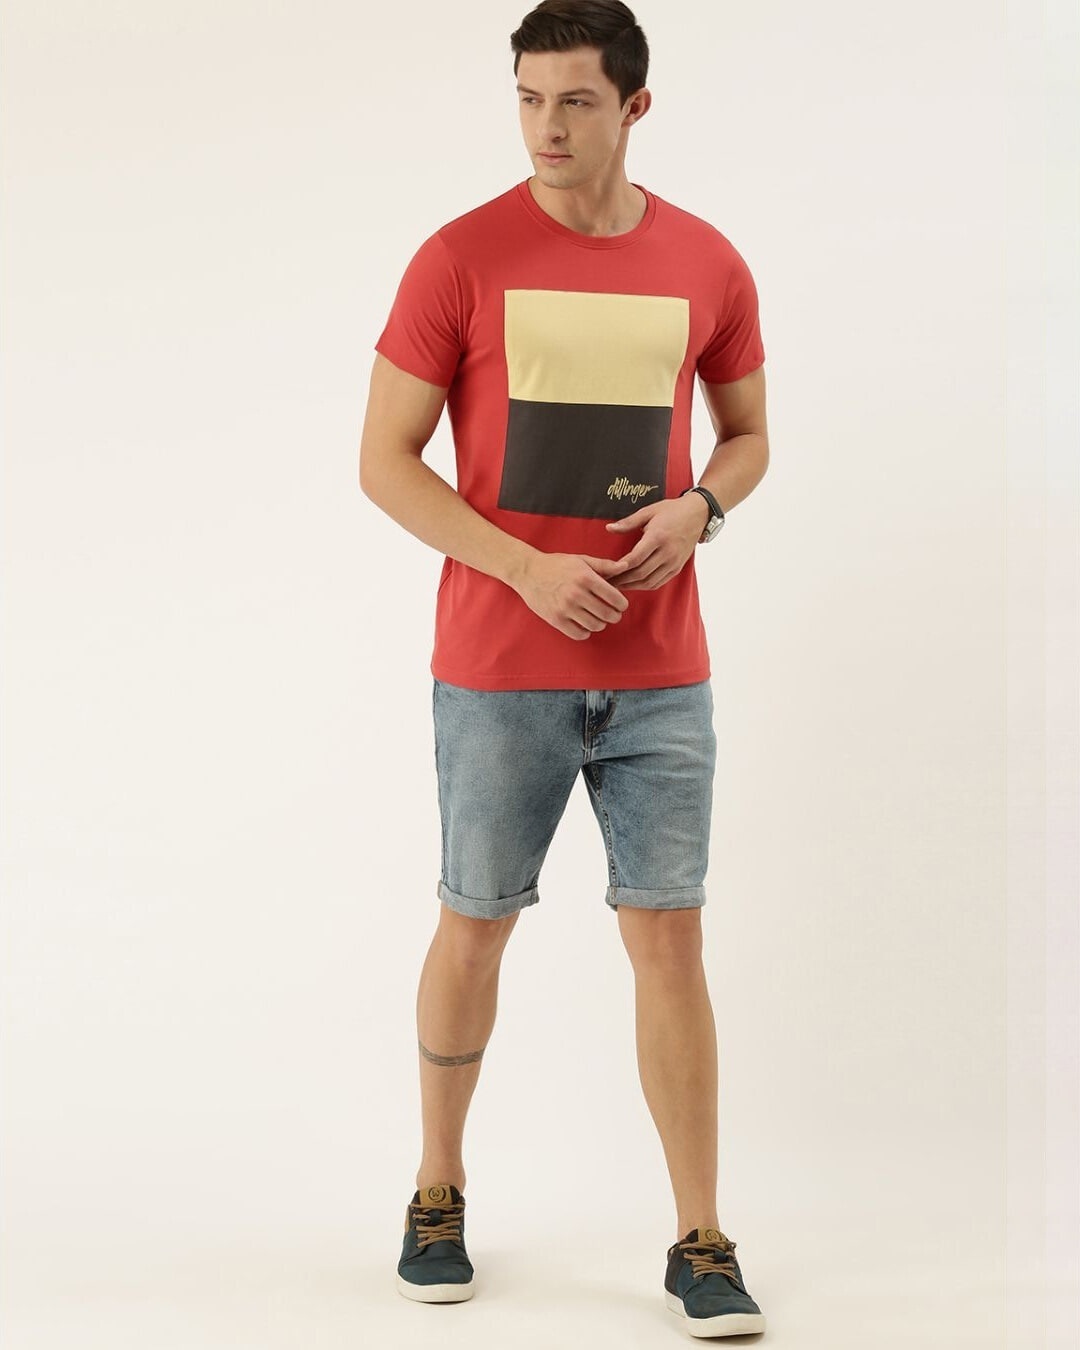 Shop Men's Red Colourblocked T-shirt